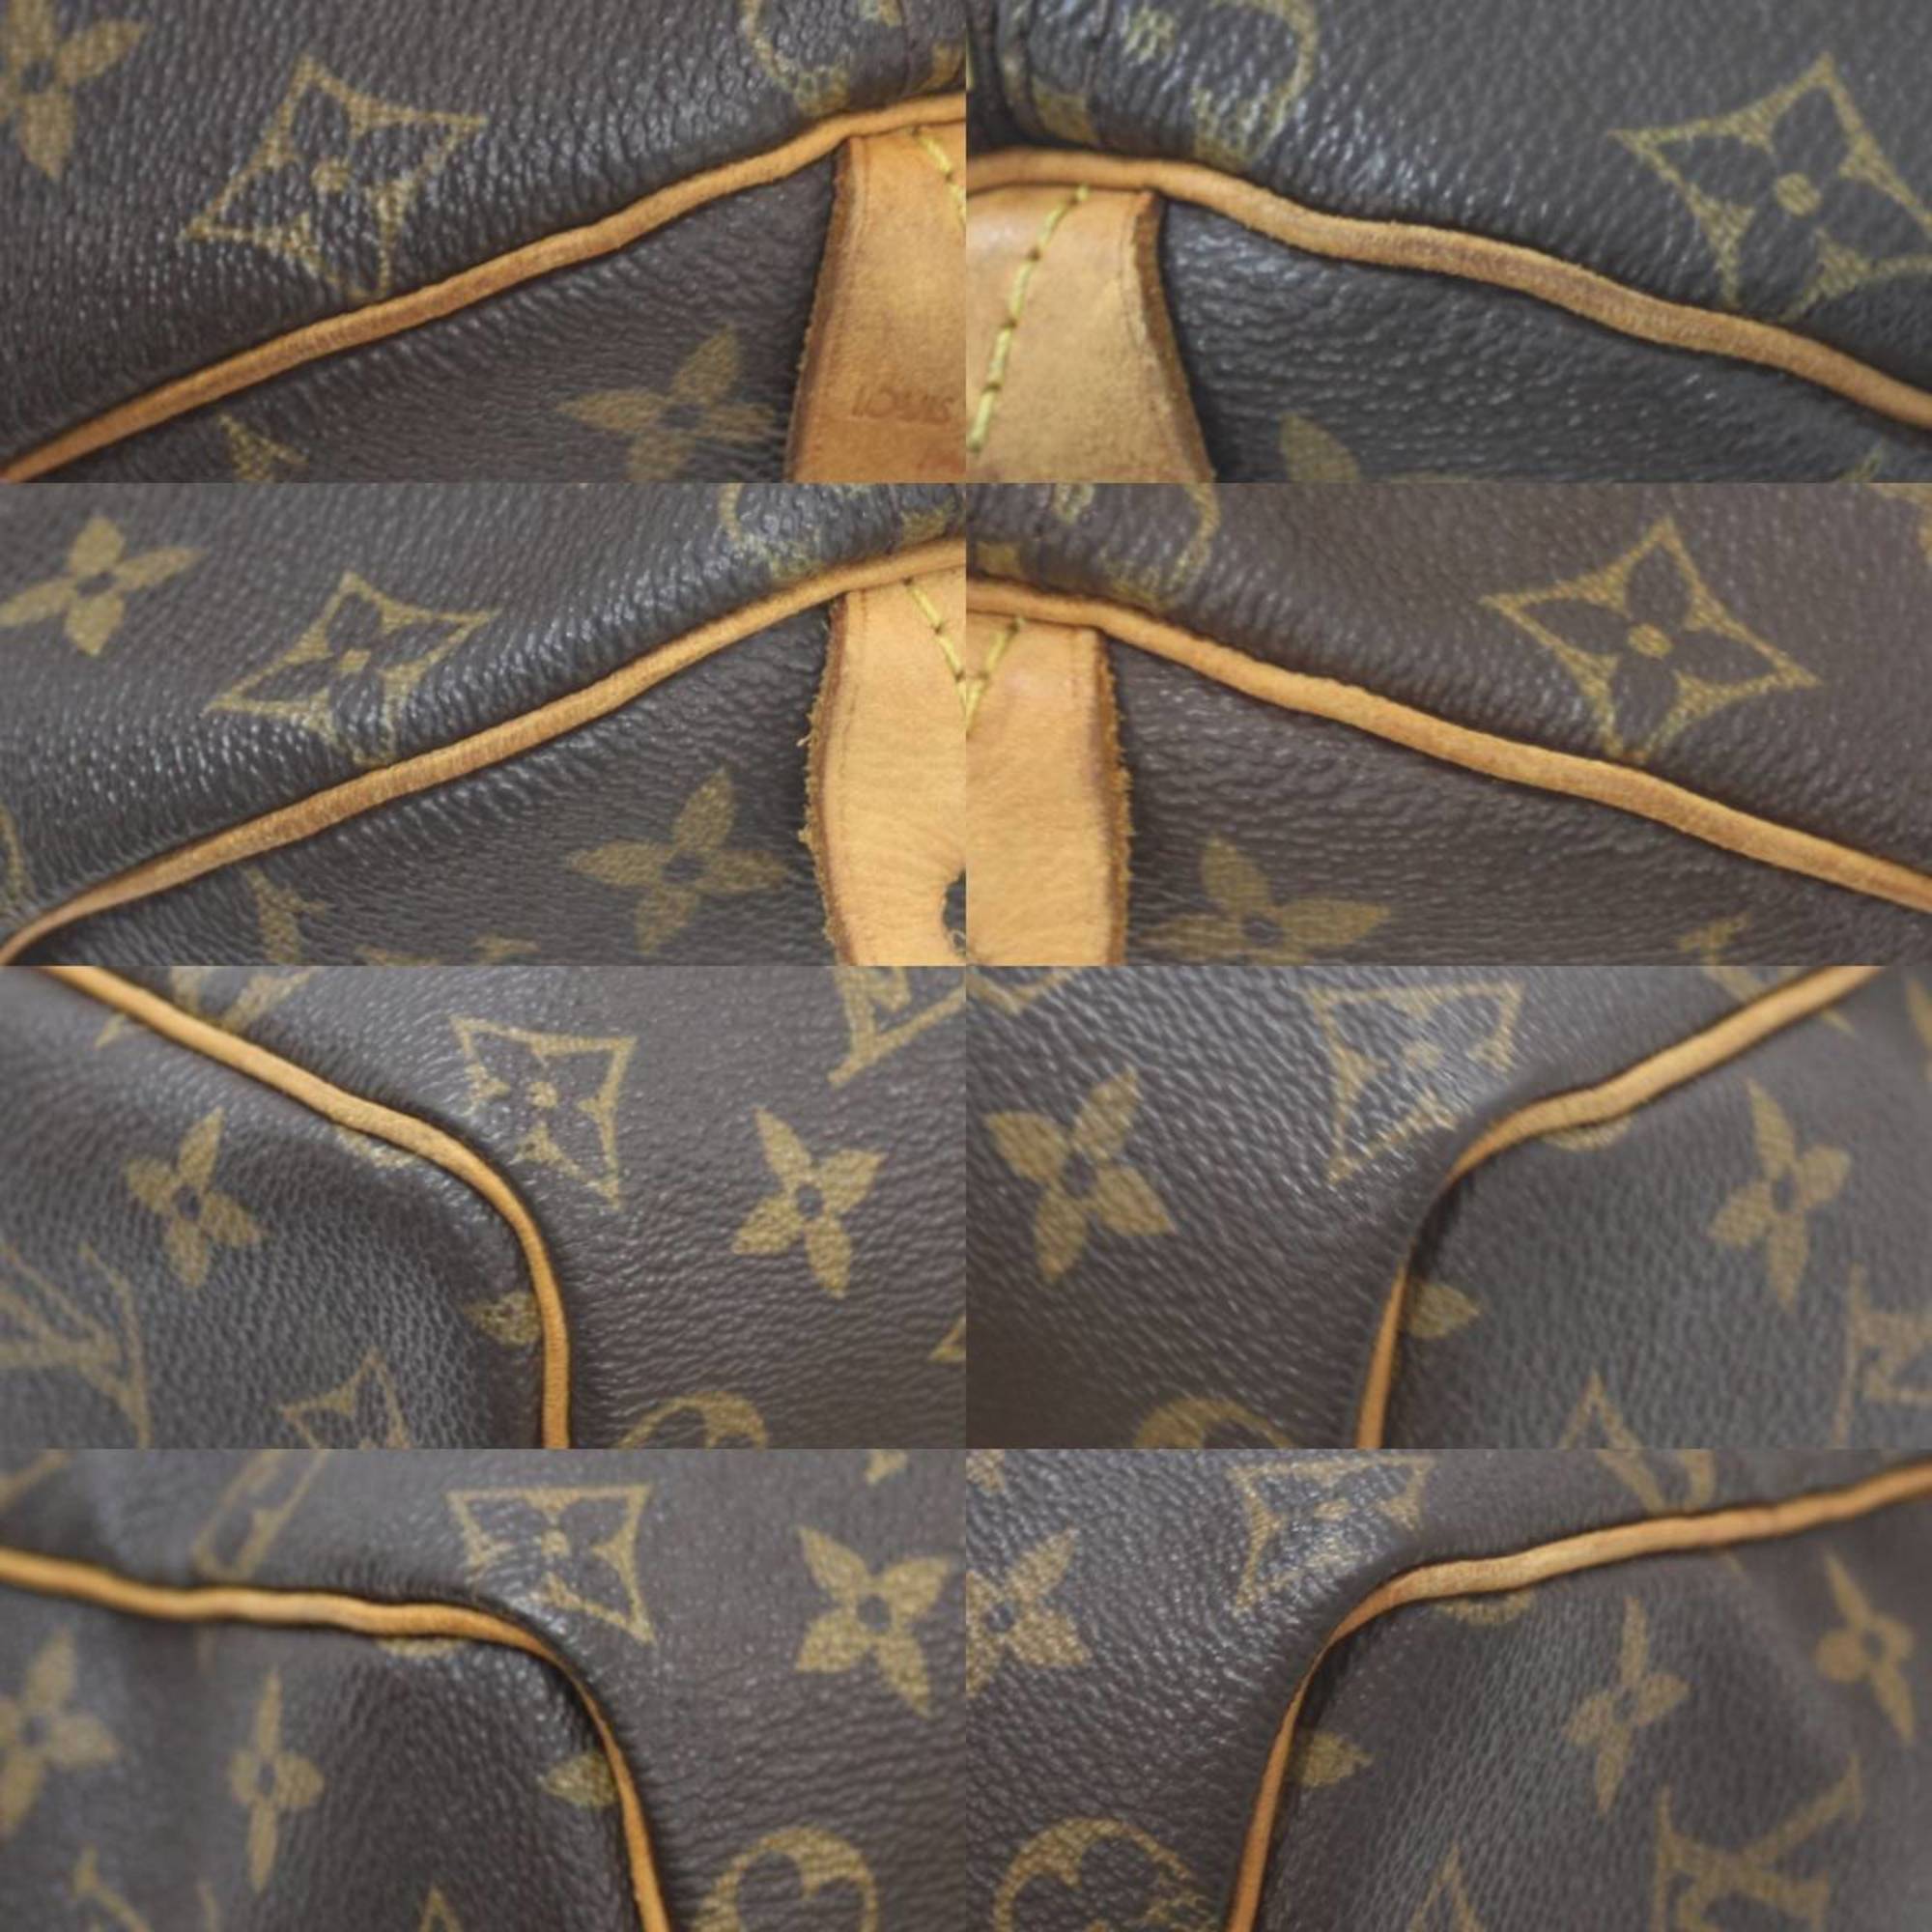 LOUIS VUITTON Louis Vuitton Speedy 25 Handbag Boston Bag Monogram M41528 SP0014